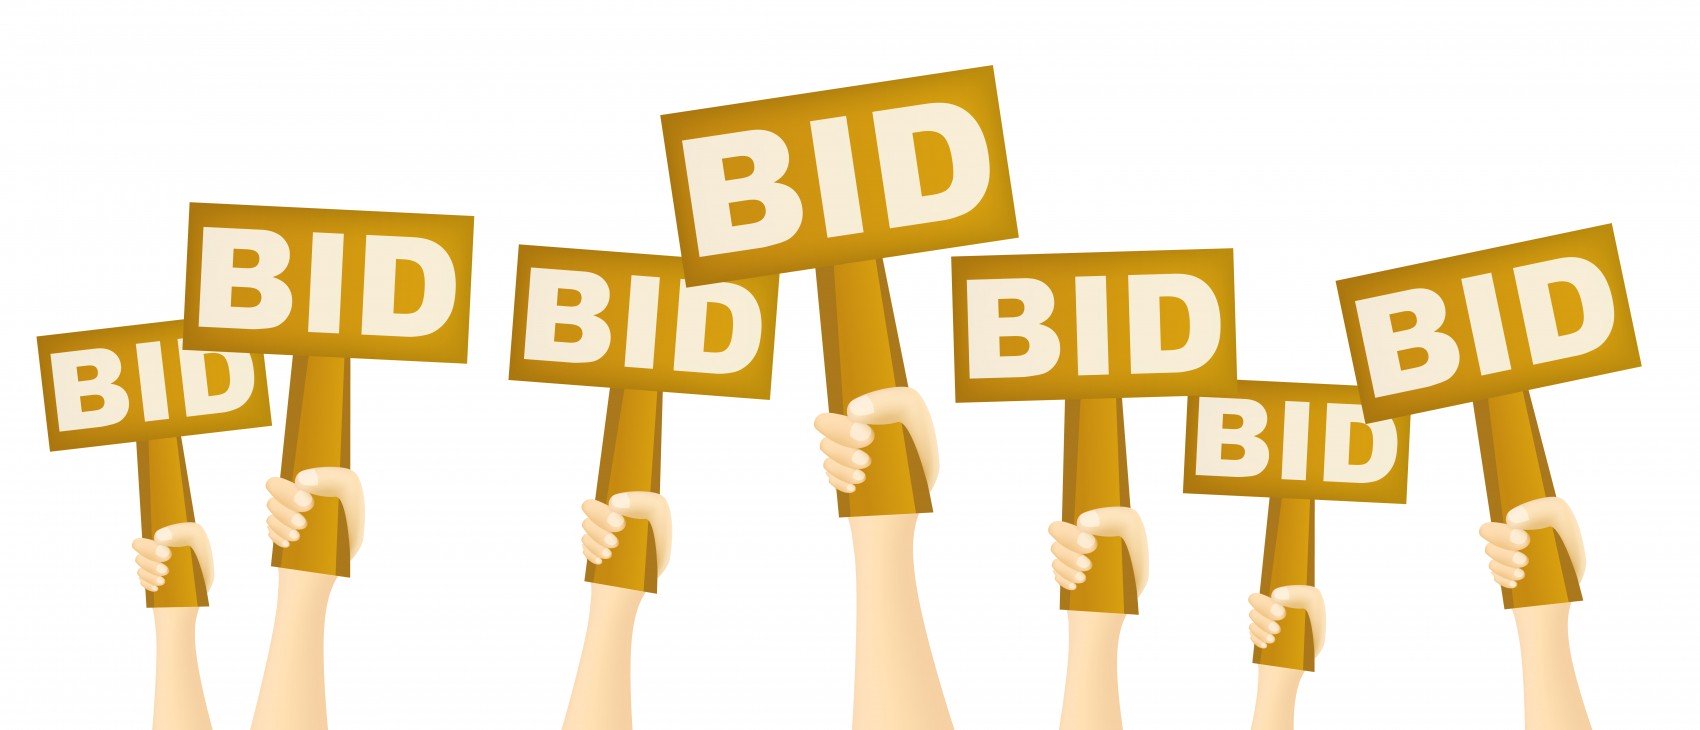 auction, bid, bidder, checkma